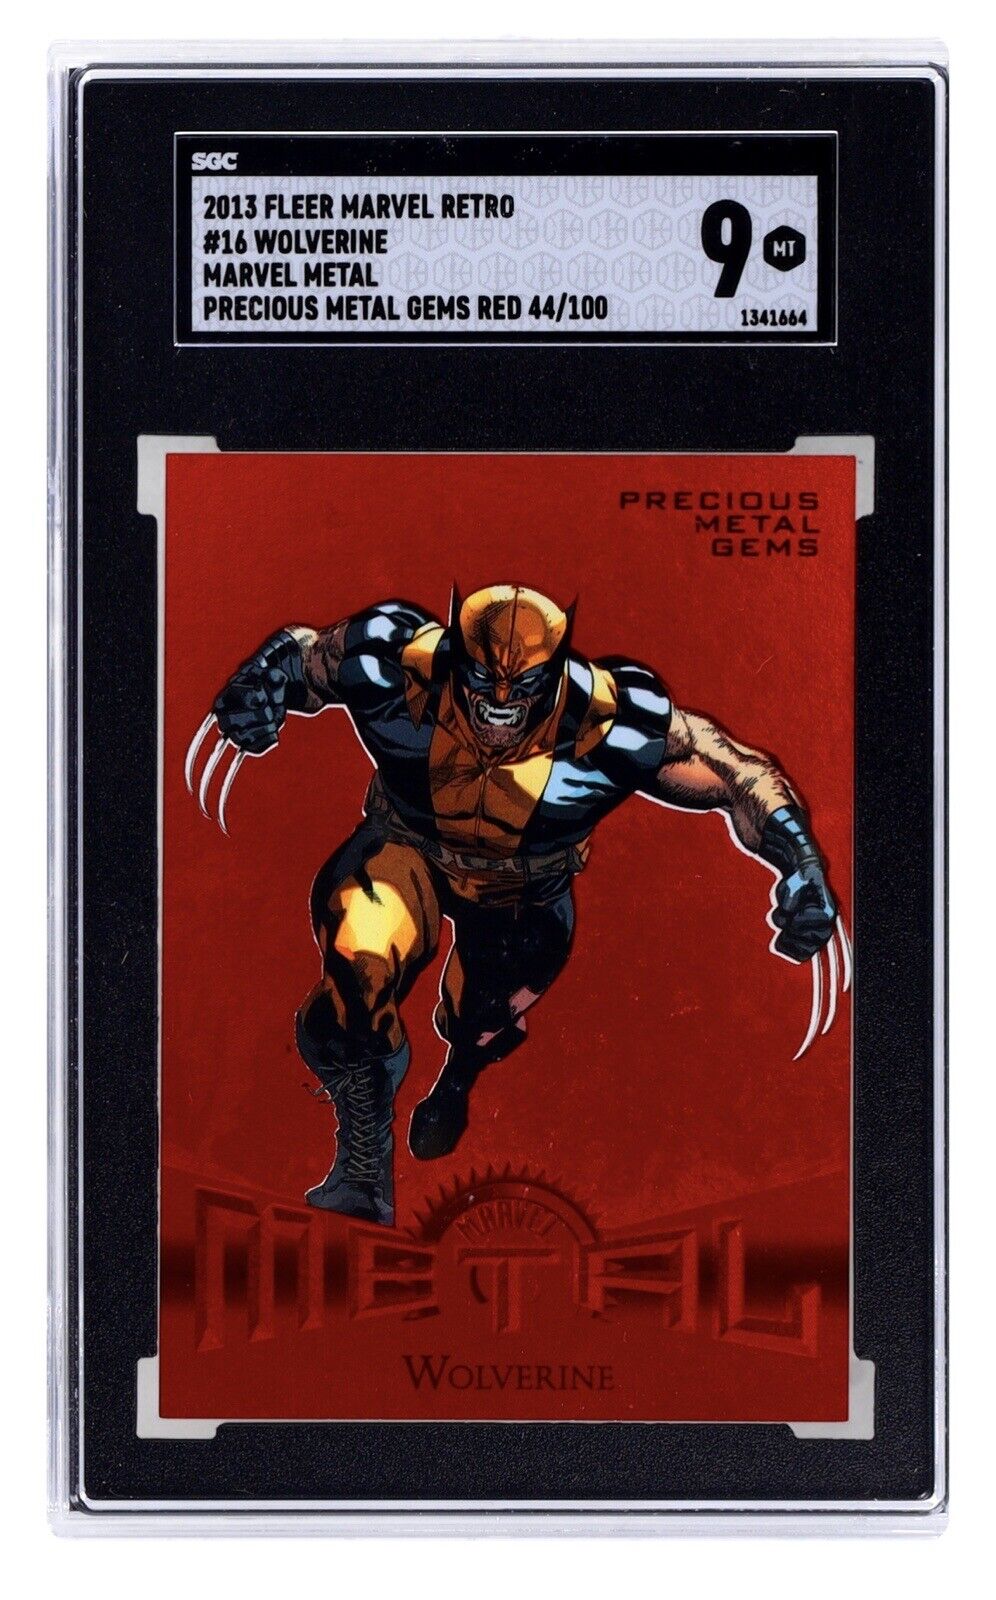 2013 Marvel Fleer Retro Precious Metal Gems Wolverine Red /99 SP SGC 9